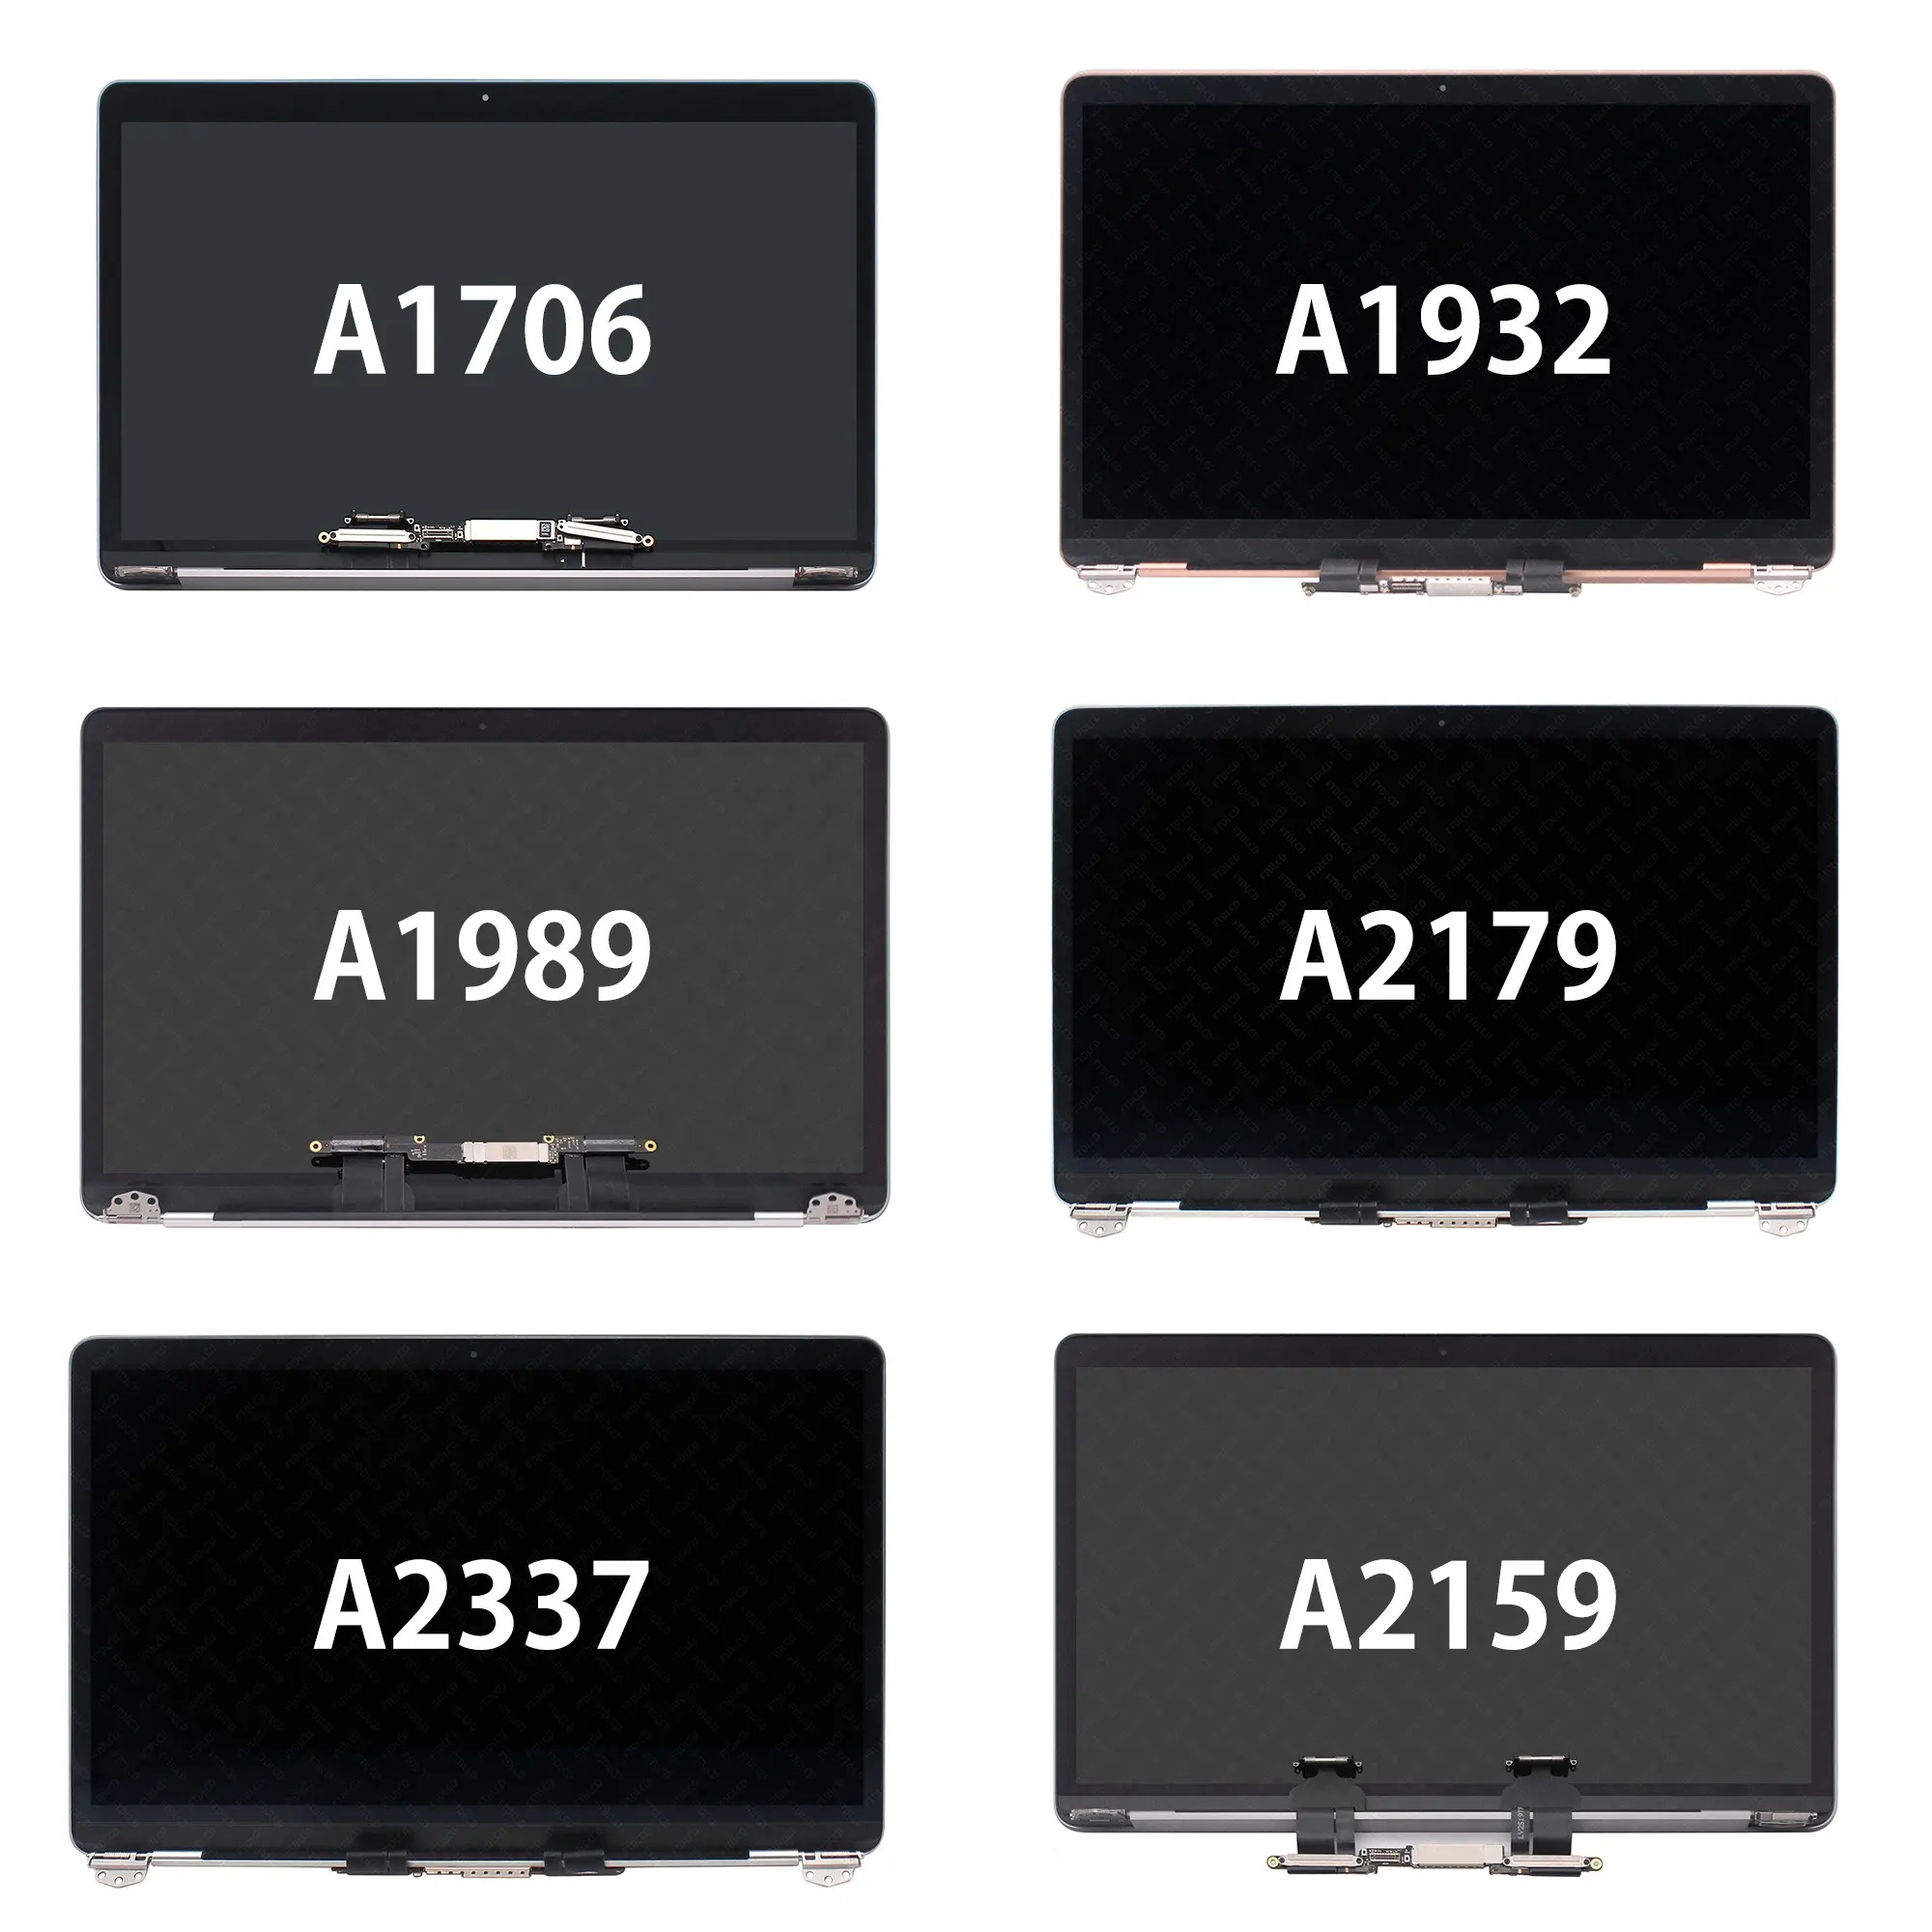 Brand New 2018 2019 A1932 LCD Display Screen Panel For Macbook Air Retina 13.3" A1932 A2179 LCD Screen EMC 3184 MRE82